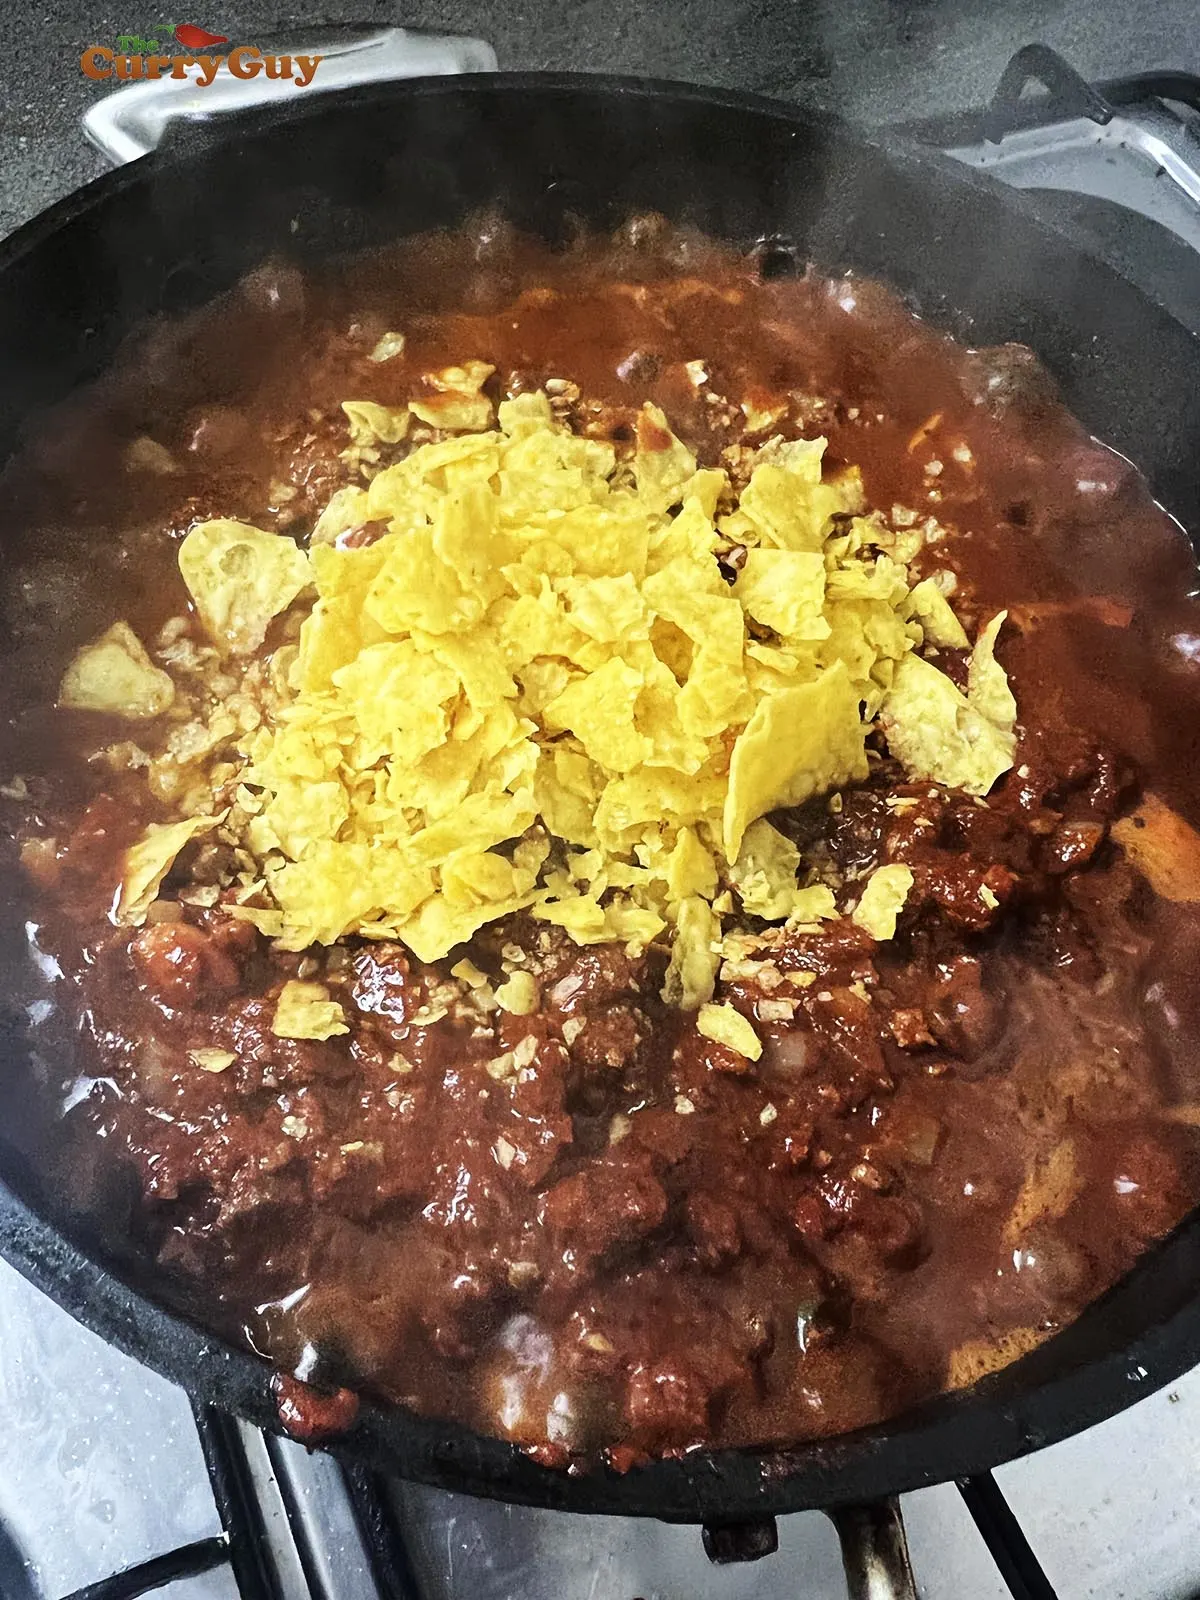 Adding corn chips to the chili con carne.